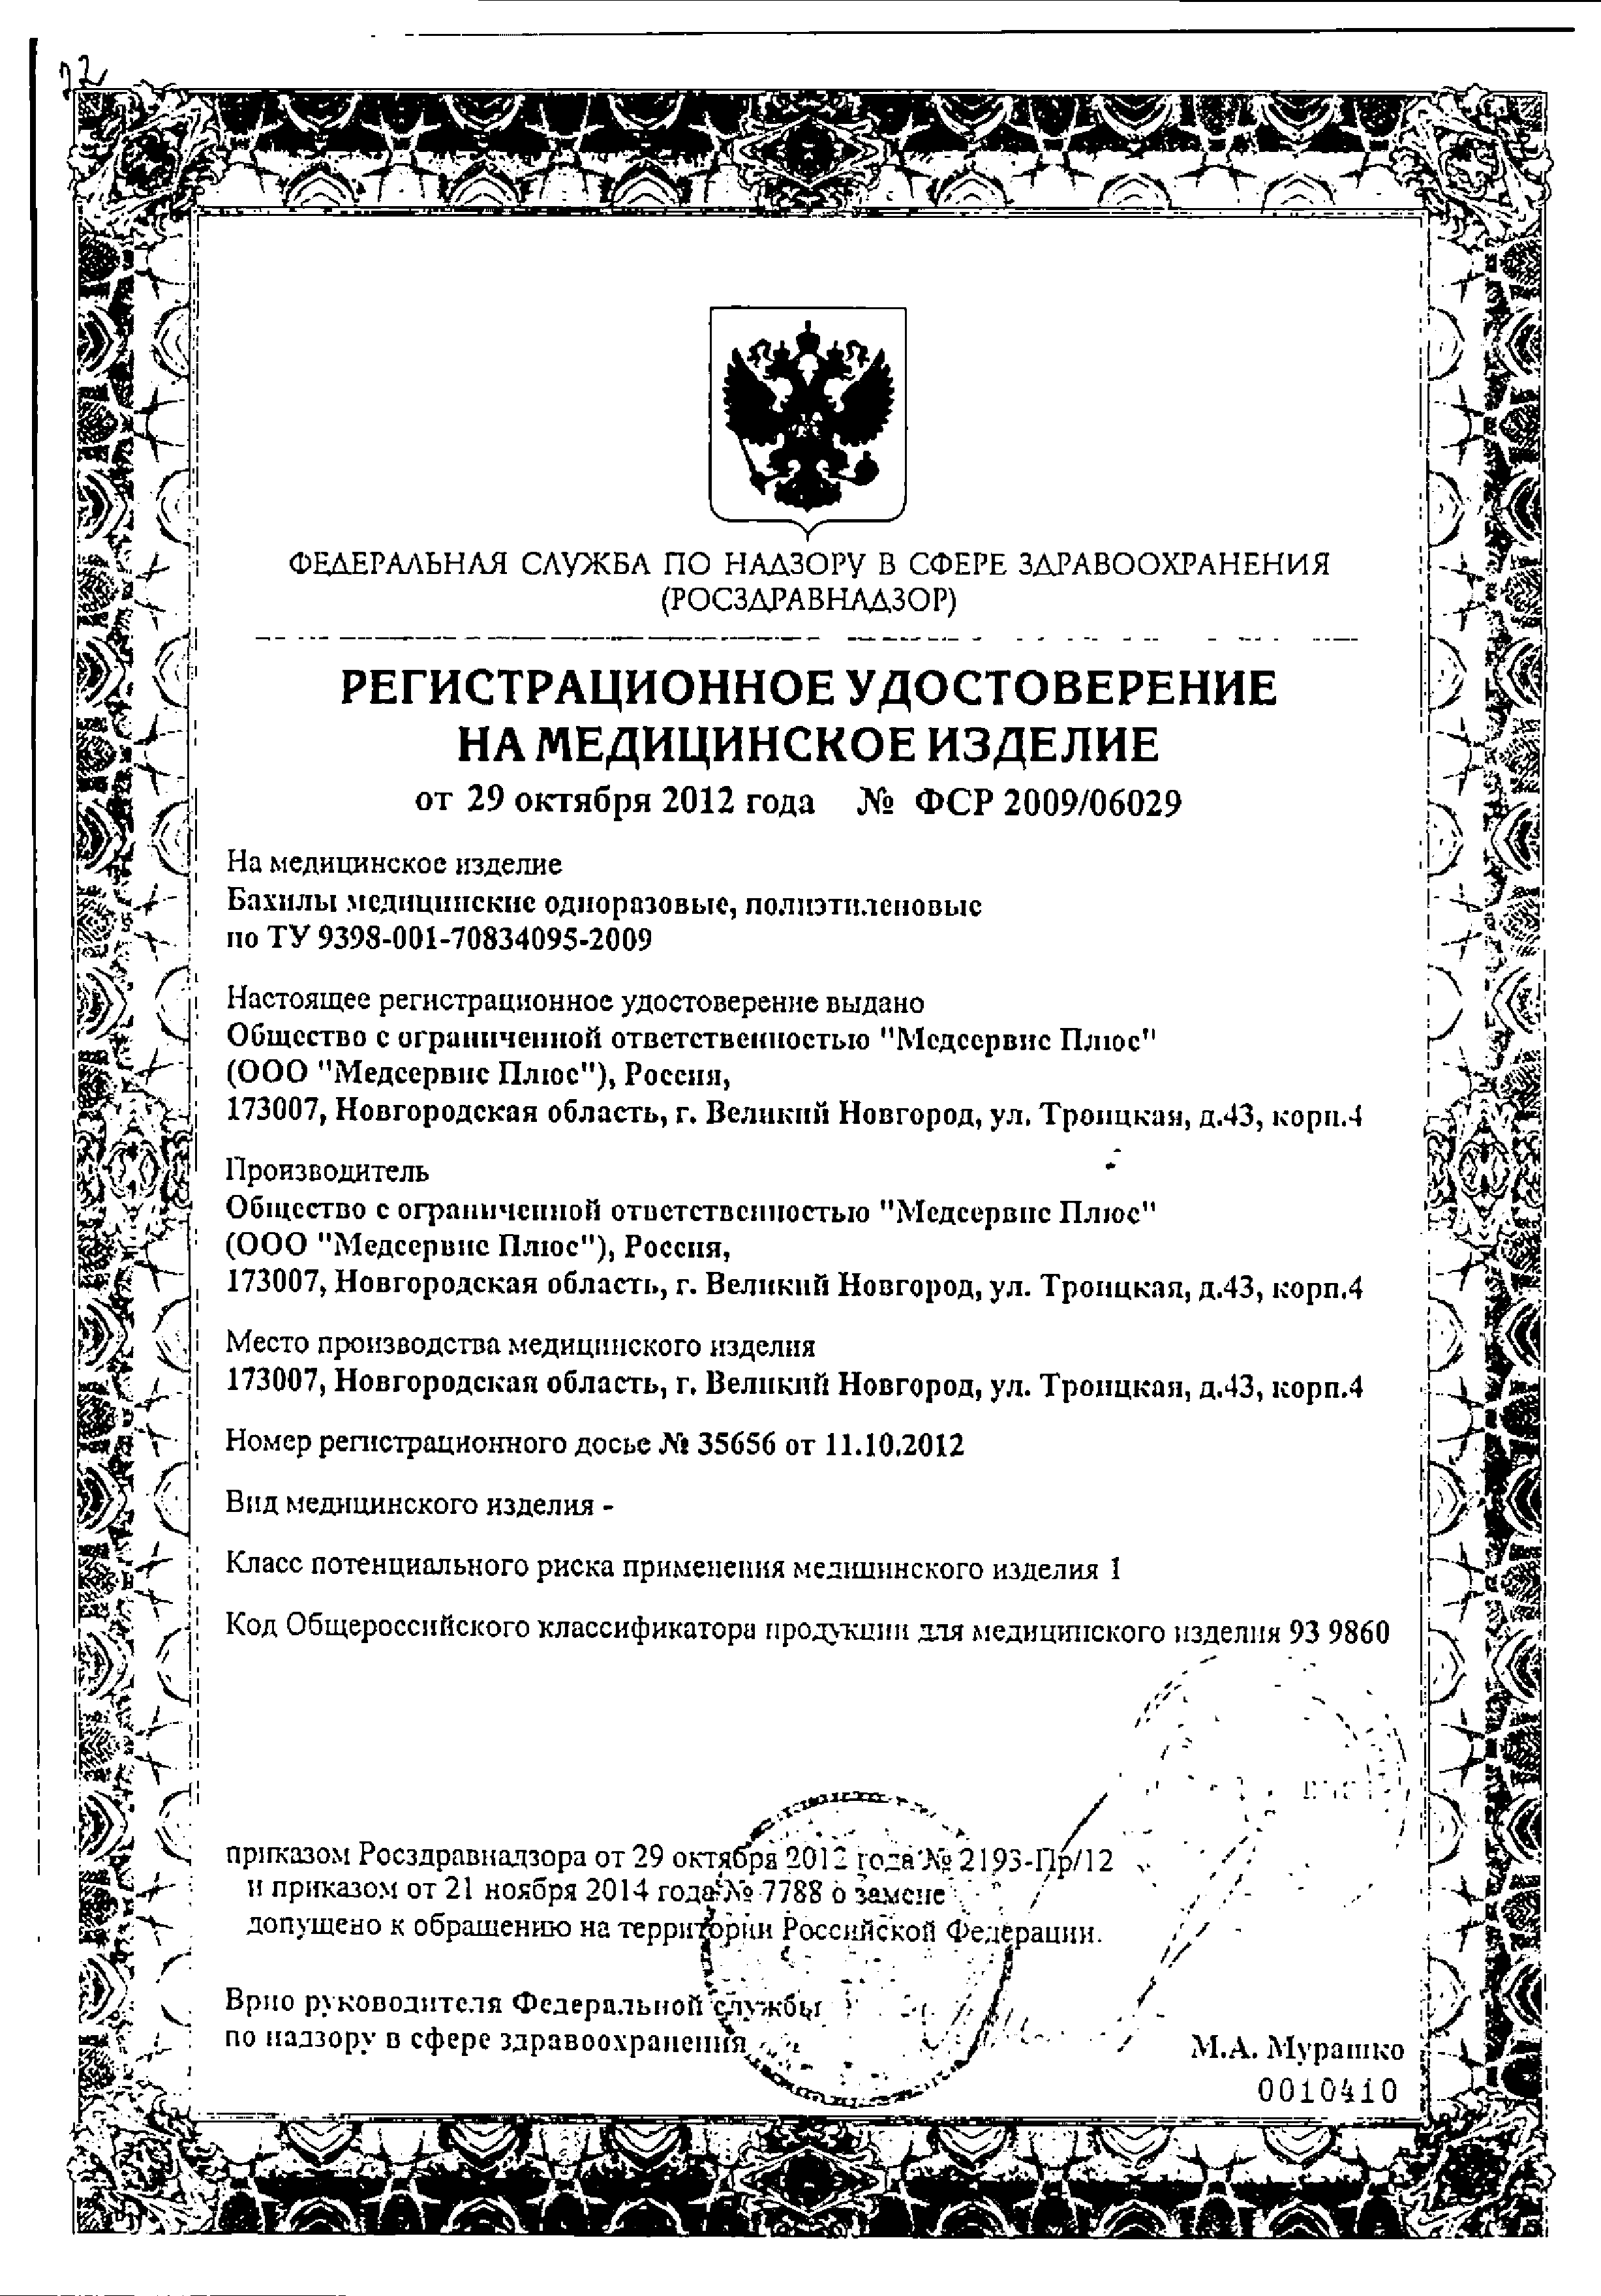 Клинса бахилы одноразовые сертификат